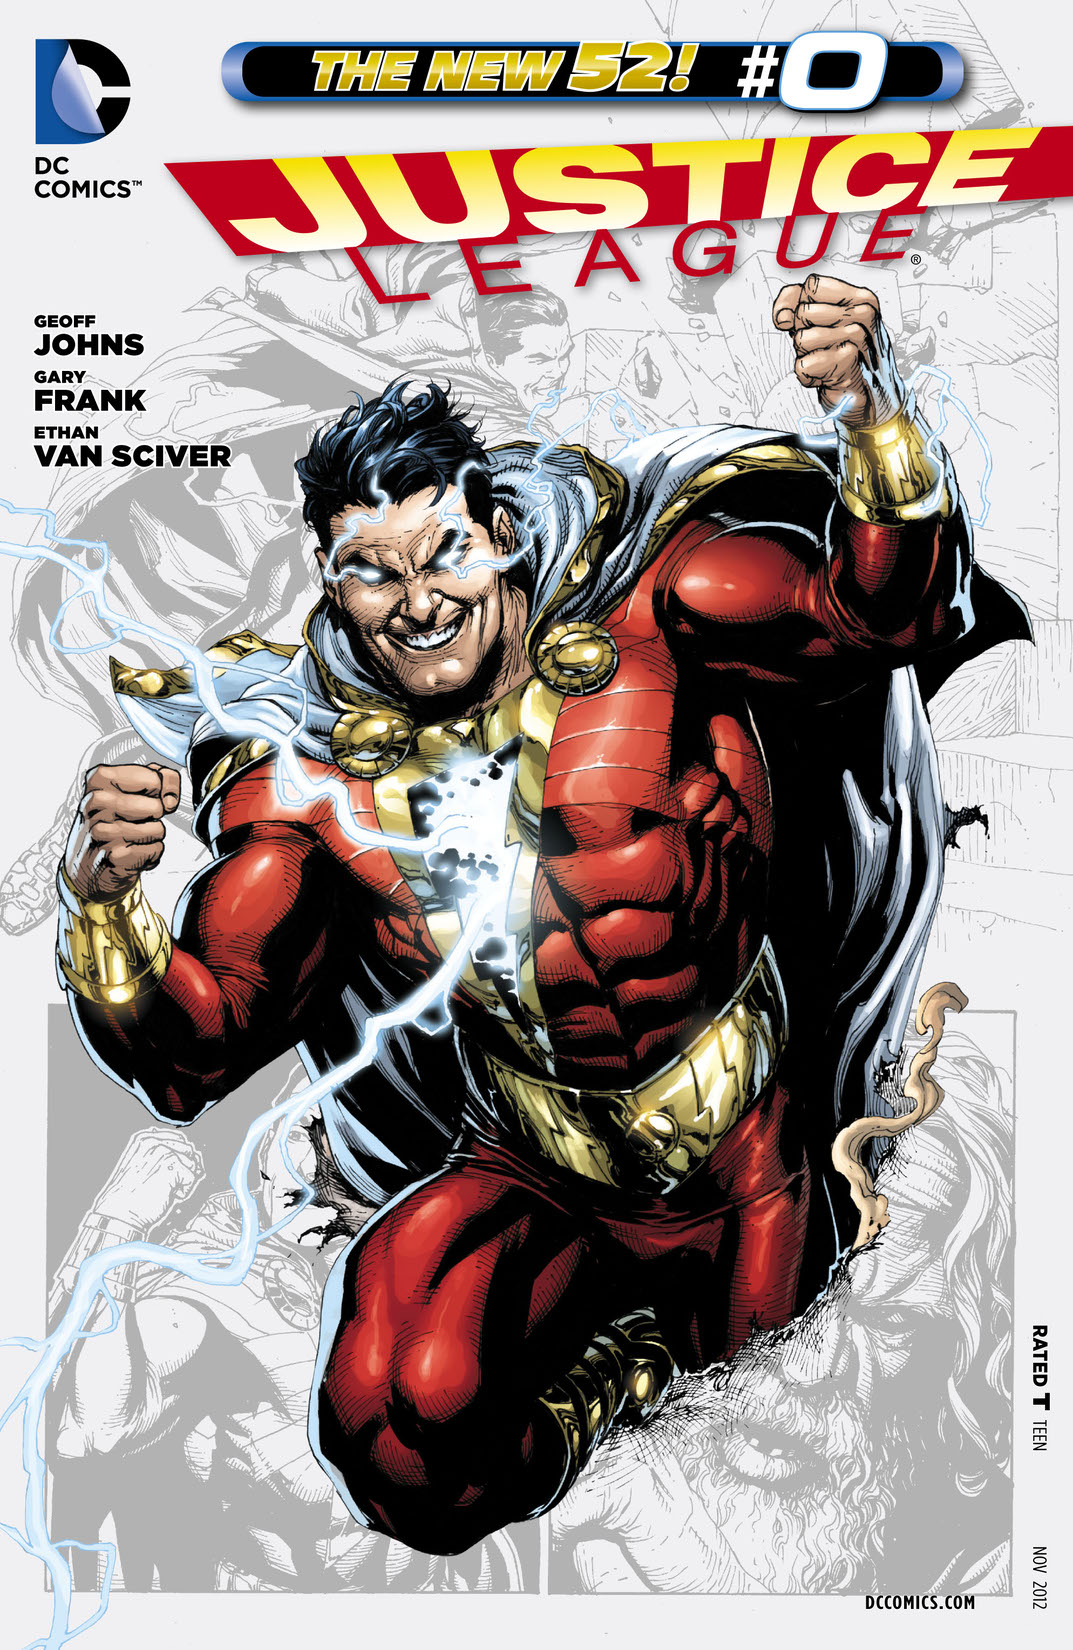 Justice League (2011-) #0 preview images